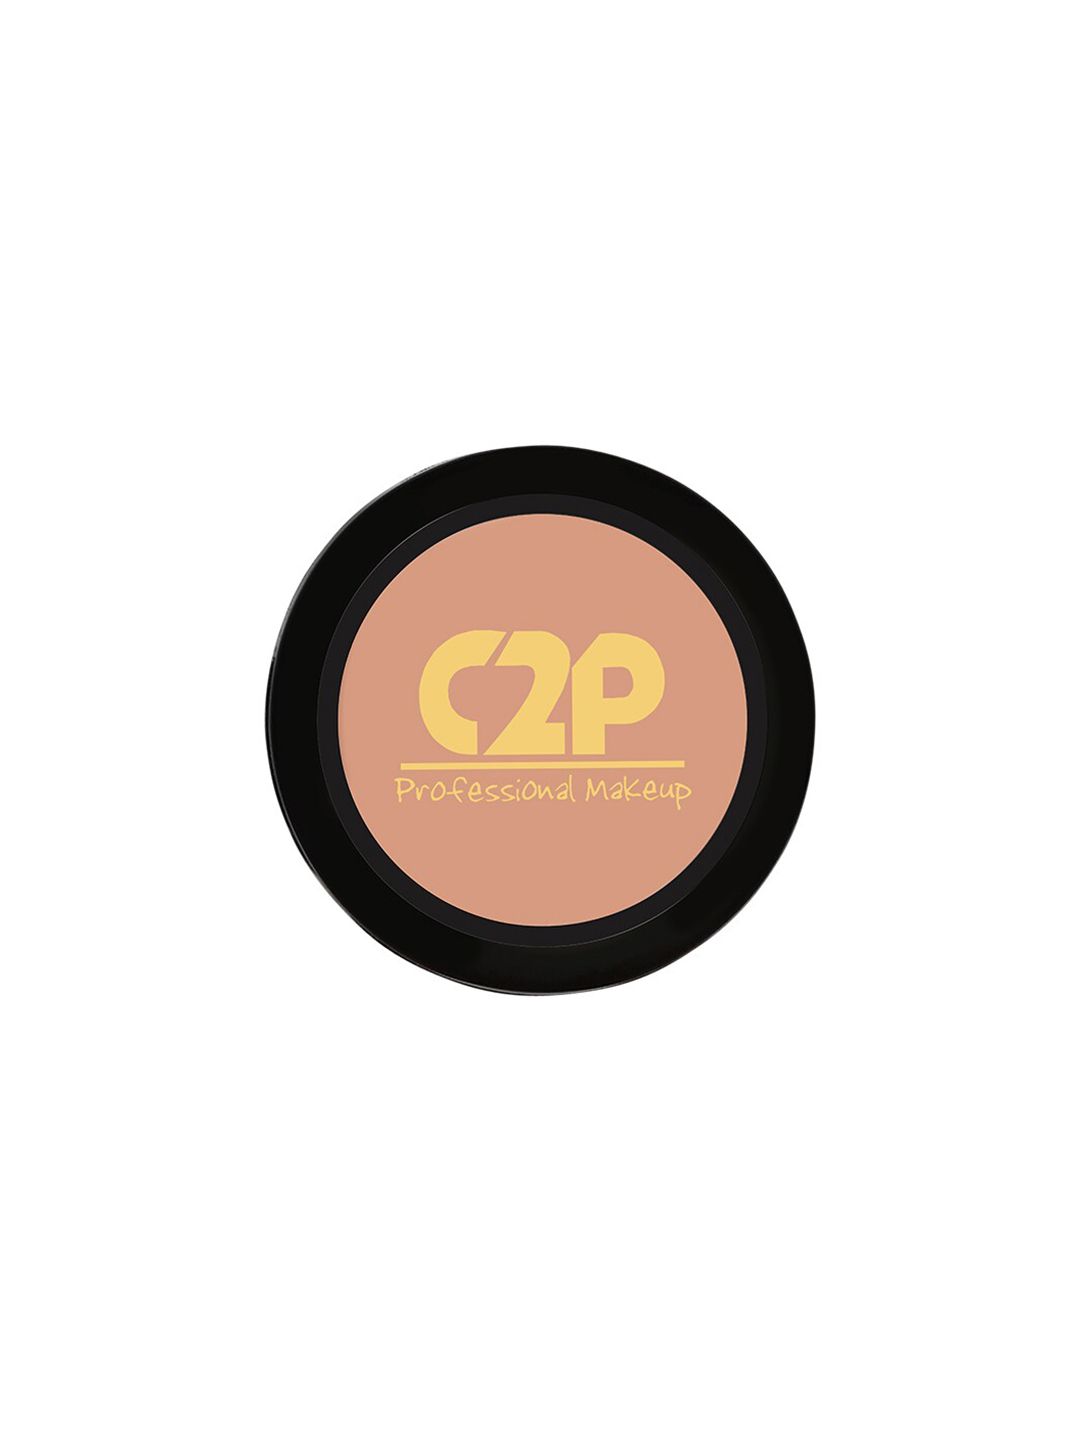 C2P PROFESSIONAL MAKEUP Nude Eyeshadow Base - Matte Price in India